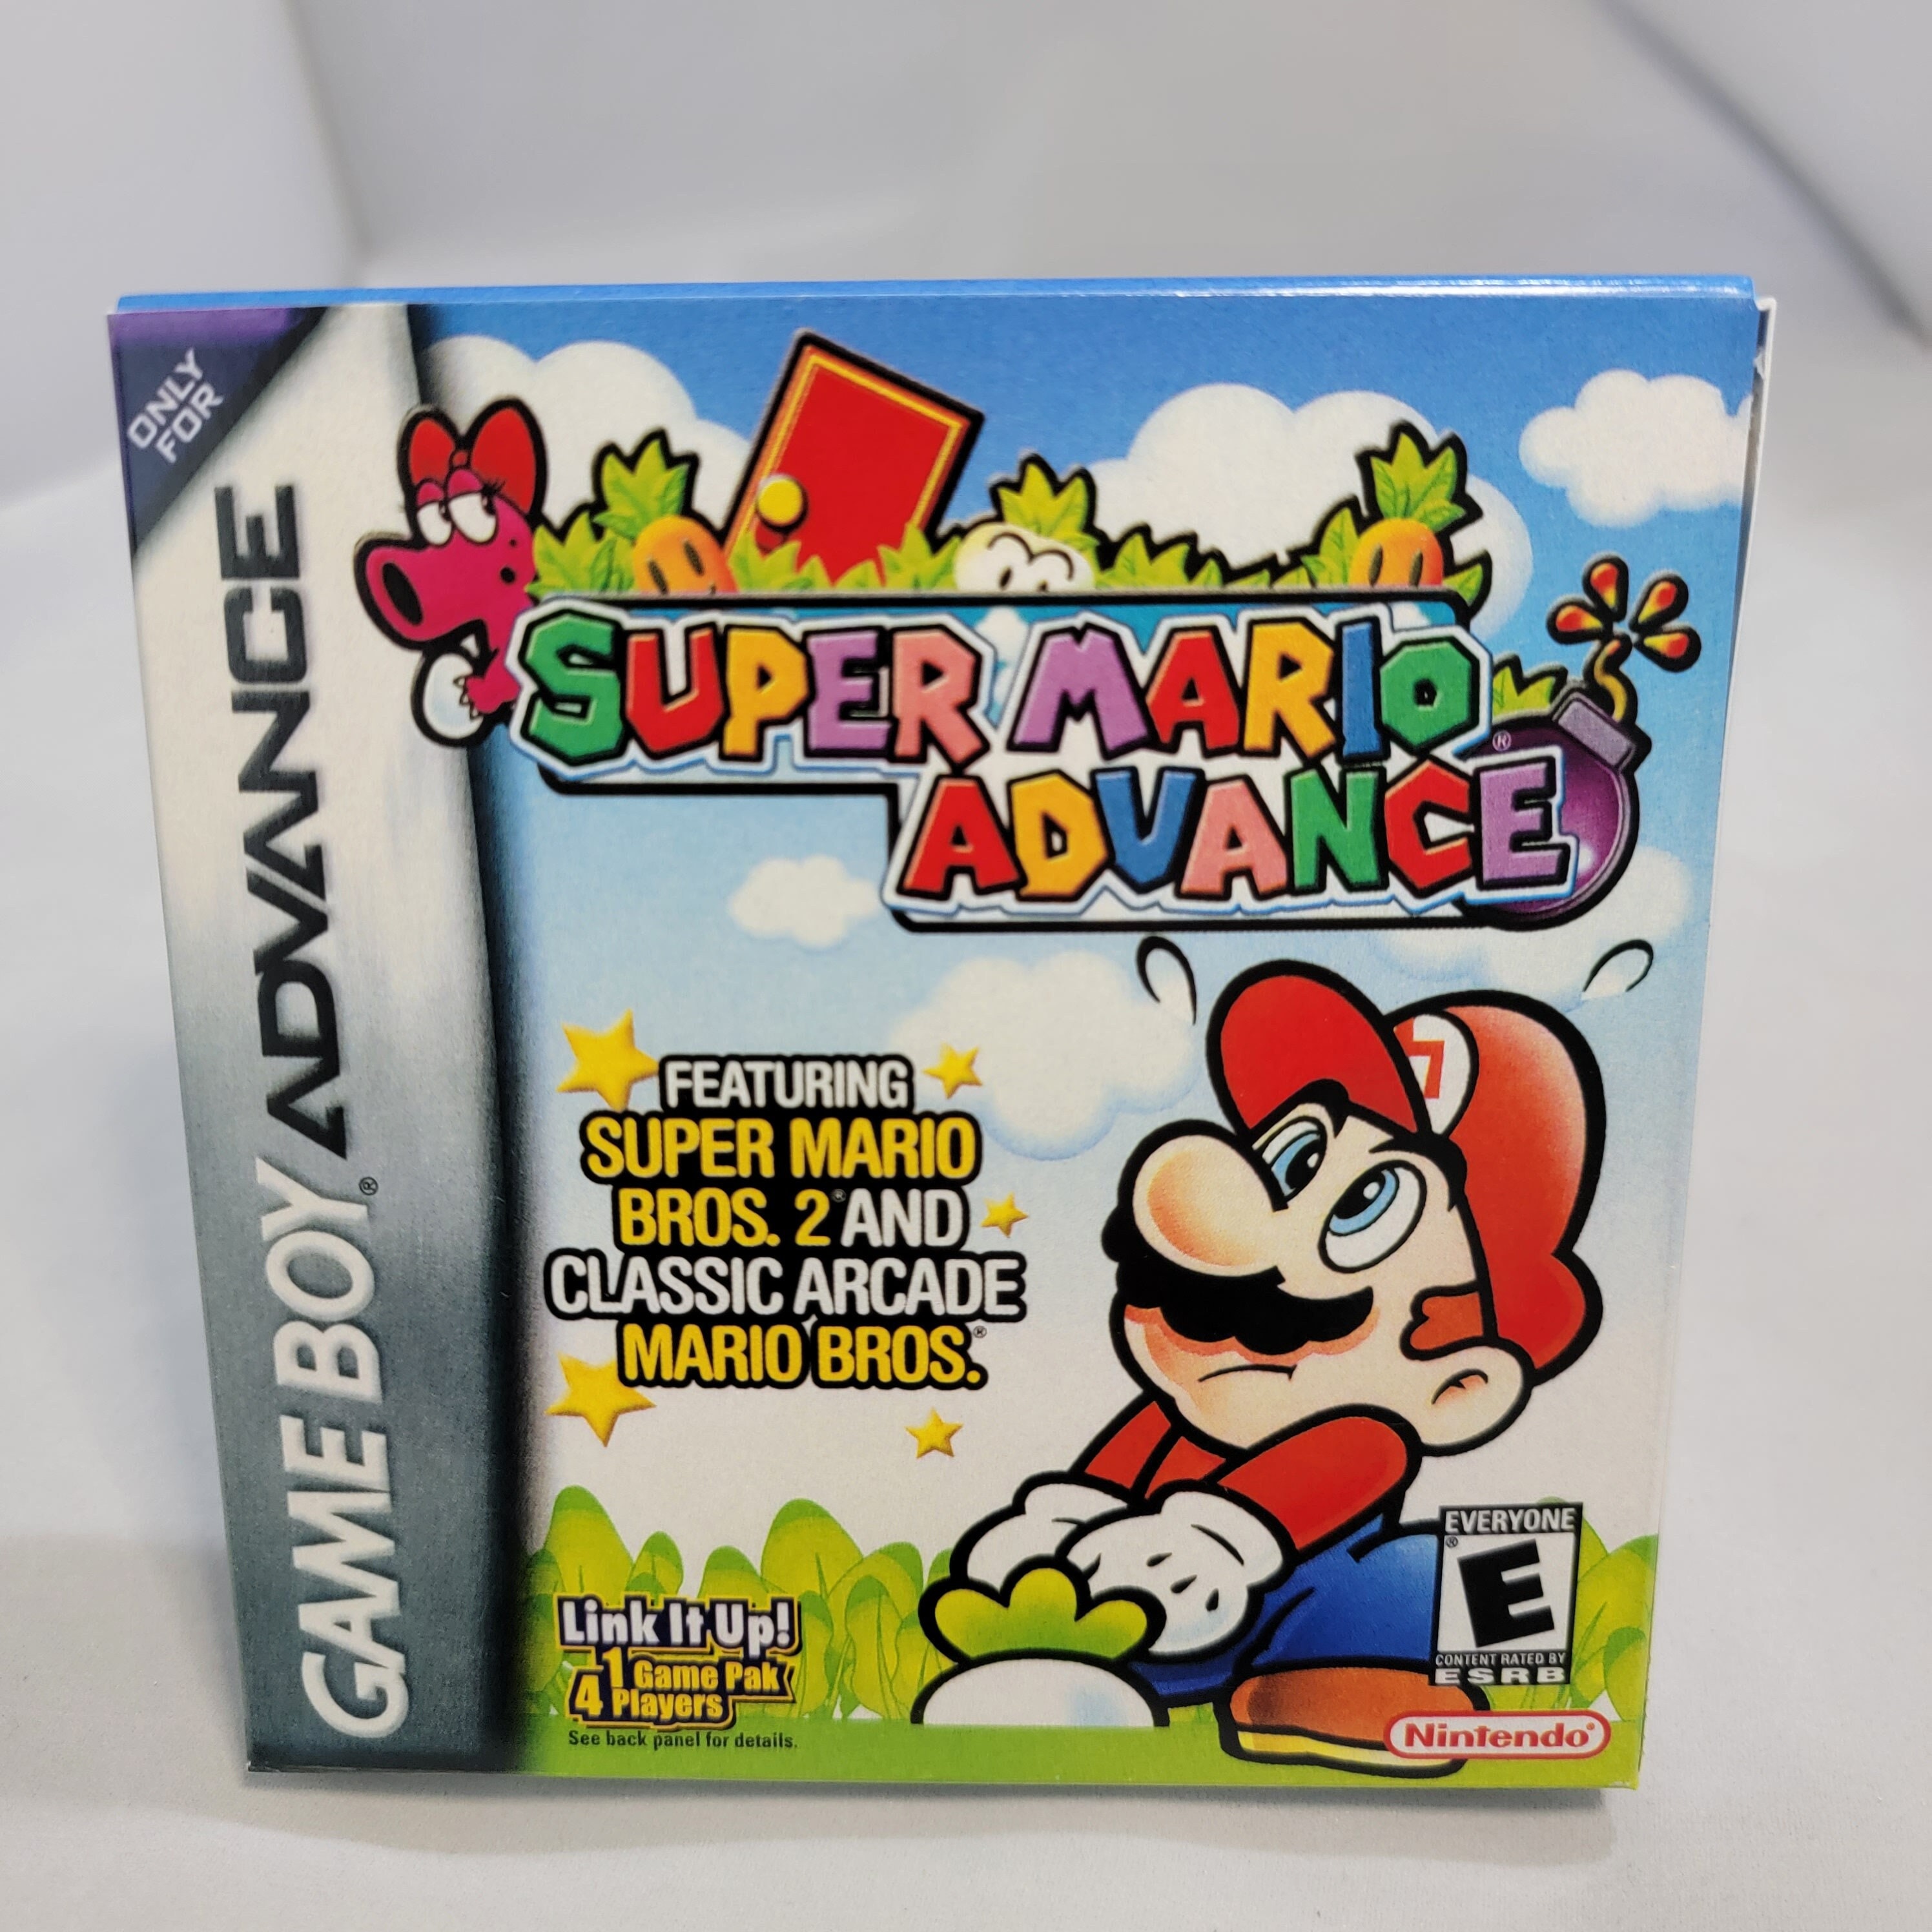 Super Mario Kart Players ChoiceBox My Games! Reproduction game boxes